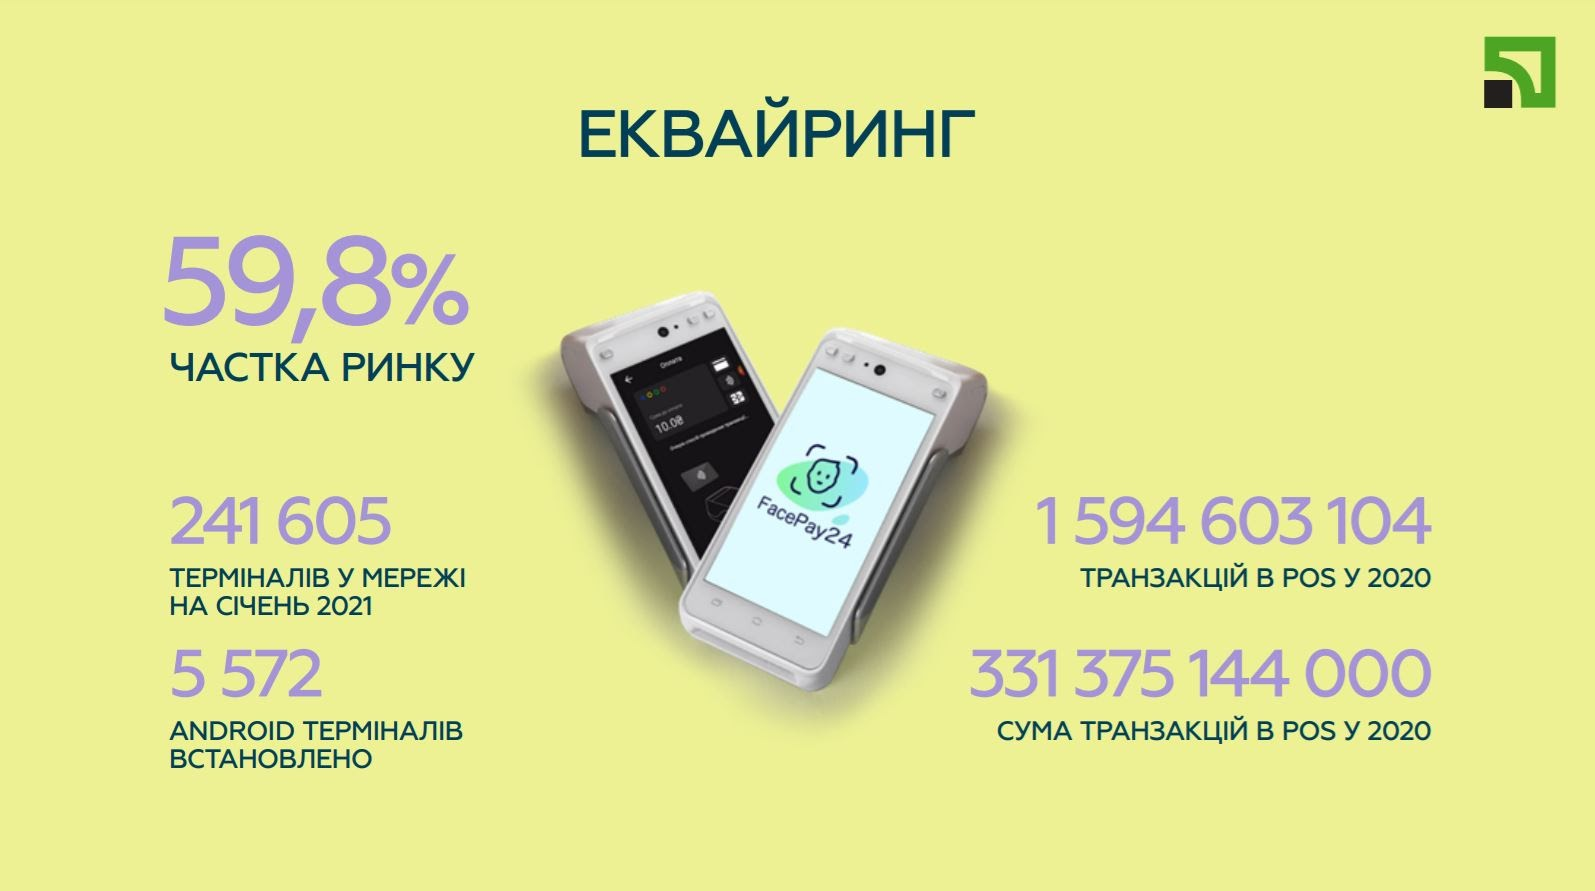 У 2020 через ПриватБанк українці оплатили картками покупок на 331,5 млрд грн